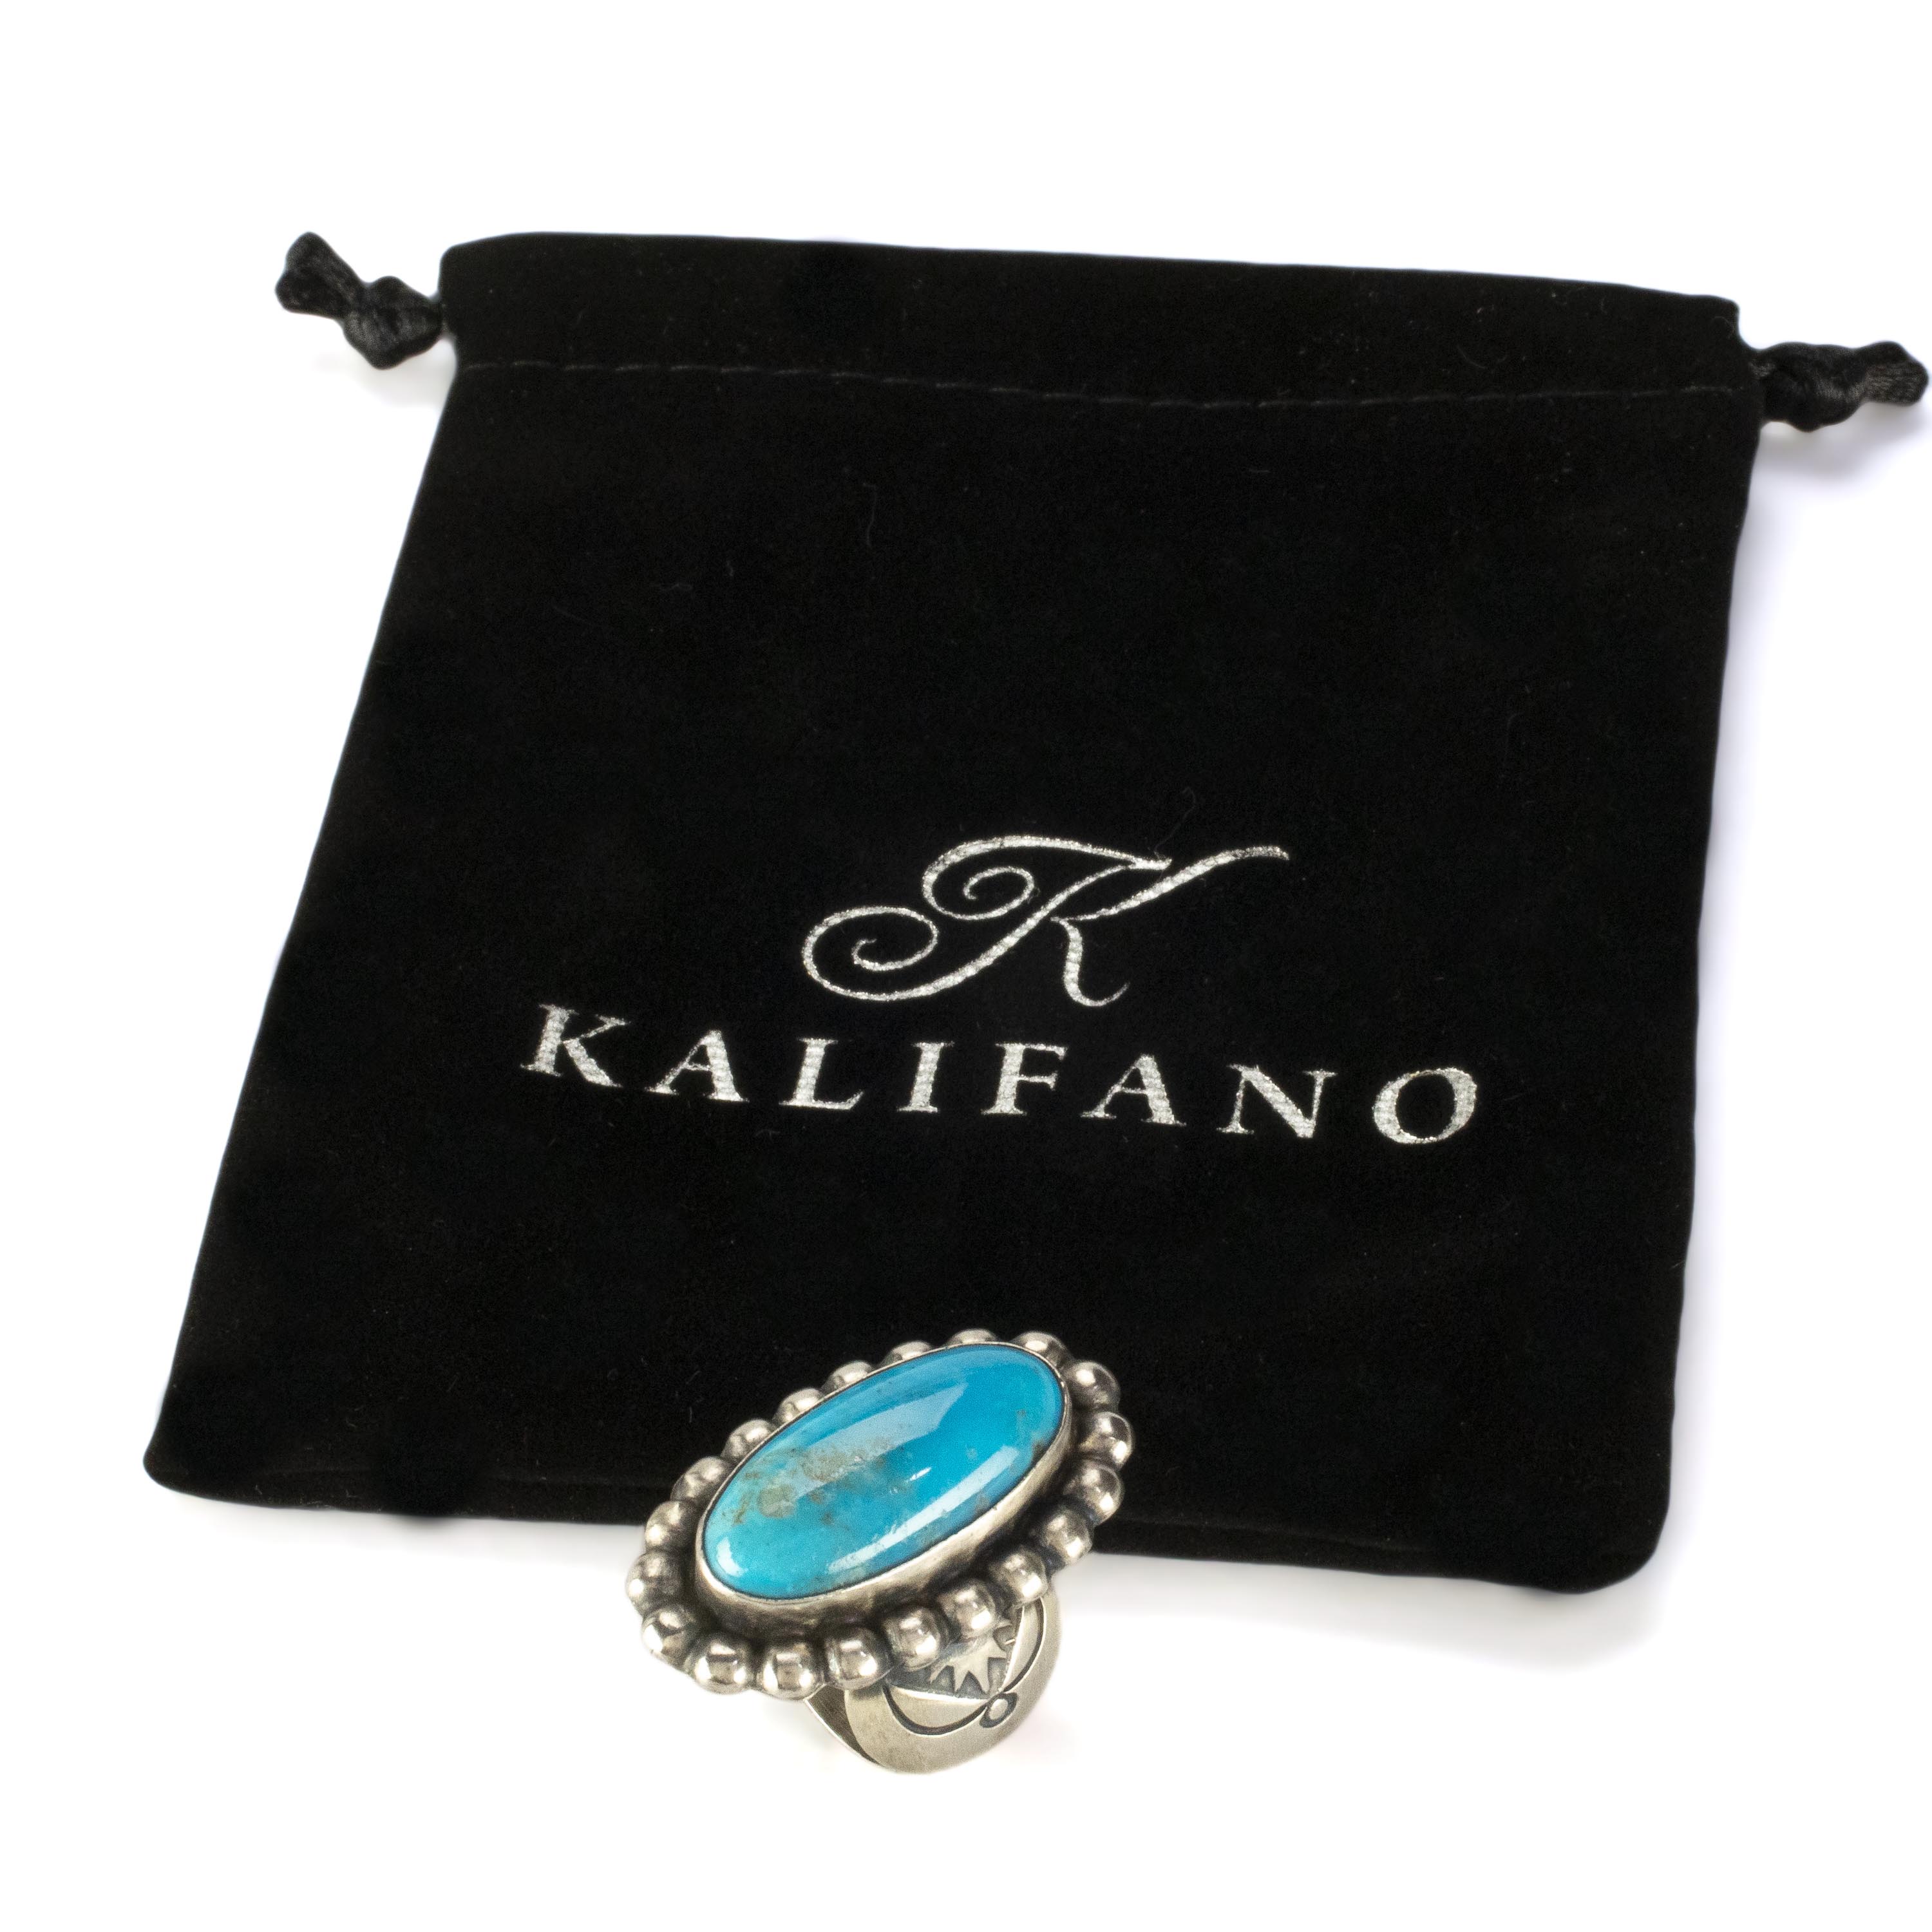 Kalifano Native American Jewelry Paul Livingston Navajo Kingman Turquoise USA Native American Made 925 Sterling Silver Ring